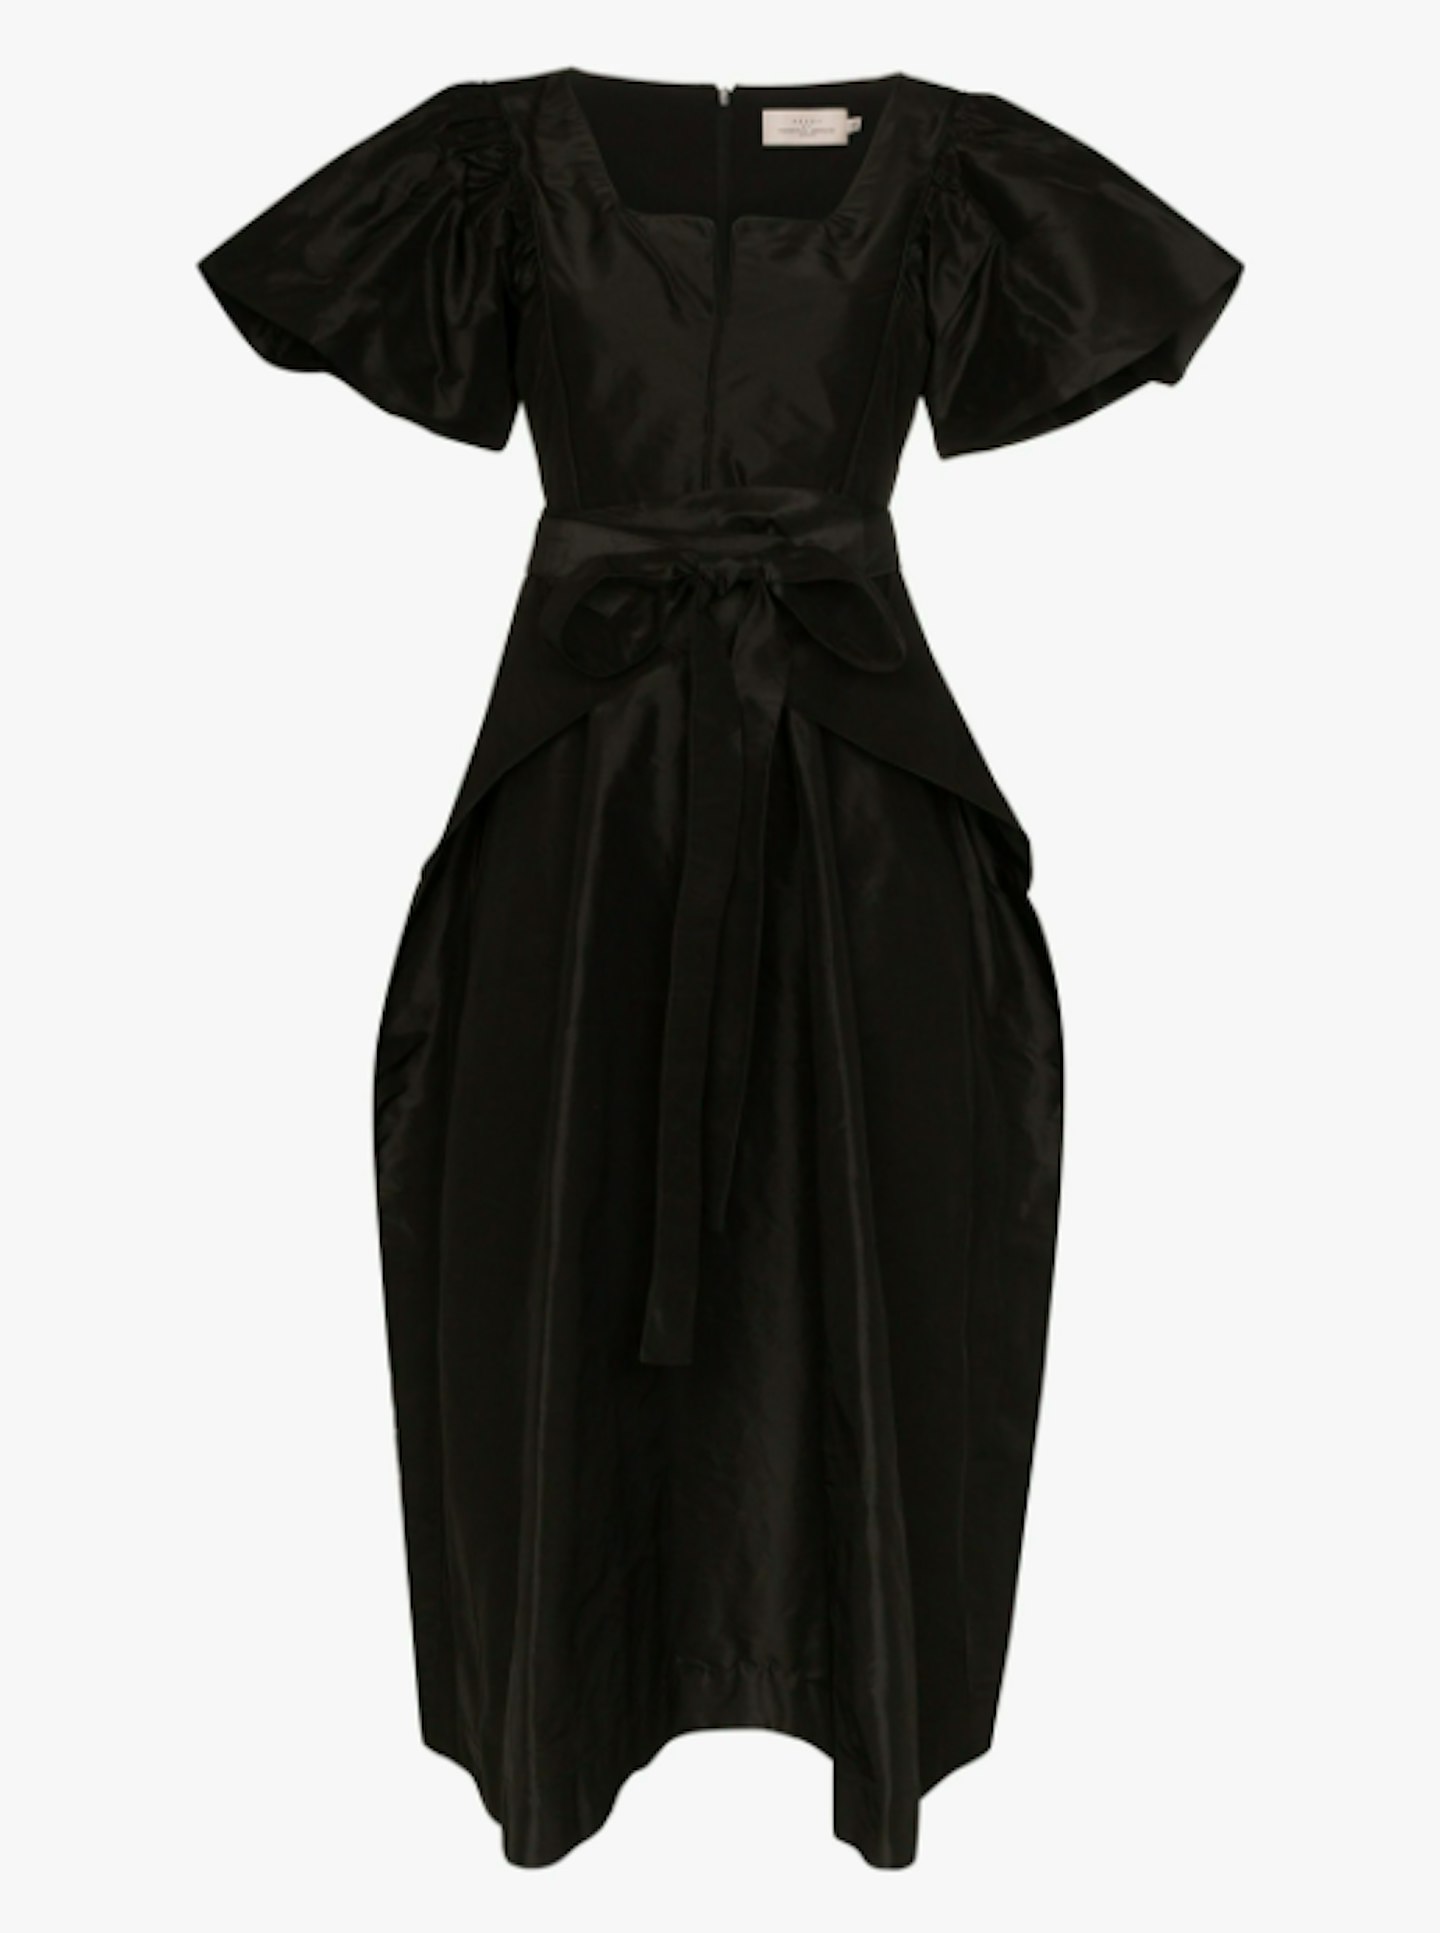 Preen by Thornton Bregazzi, Jayda Puff-Sleeved Dress, £1,430 at Browns